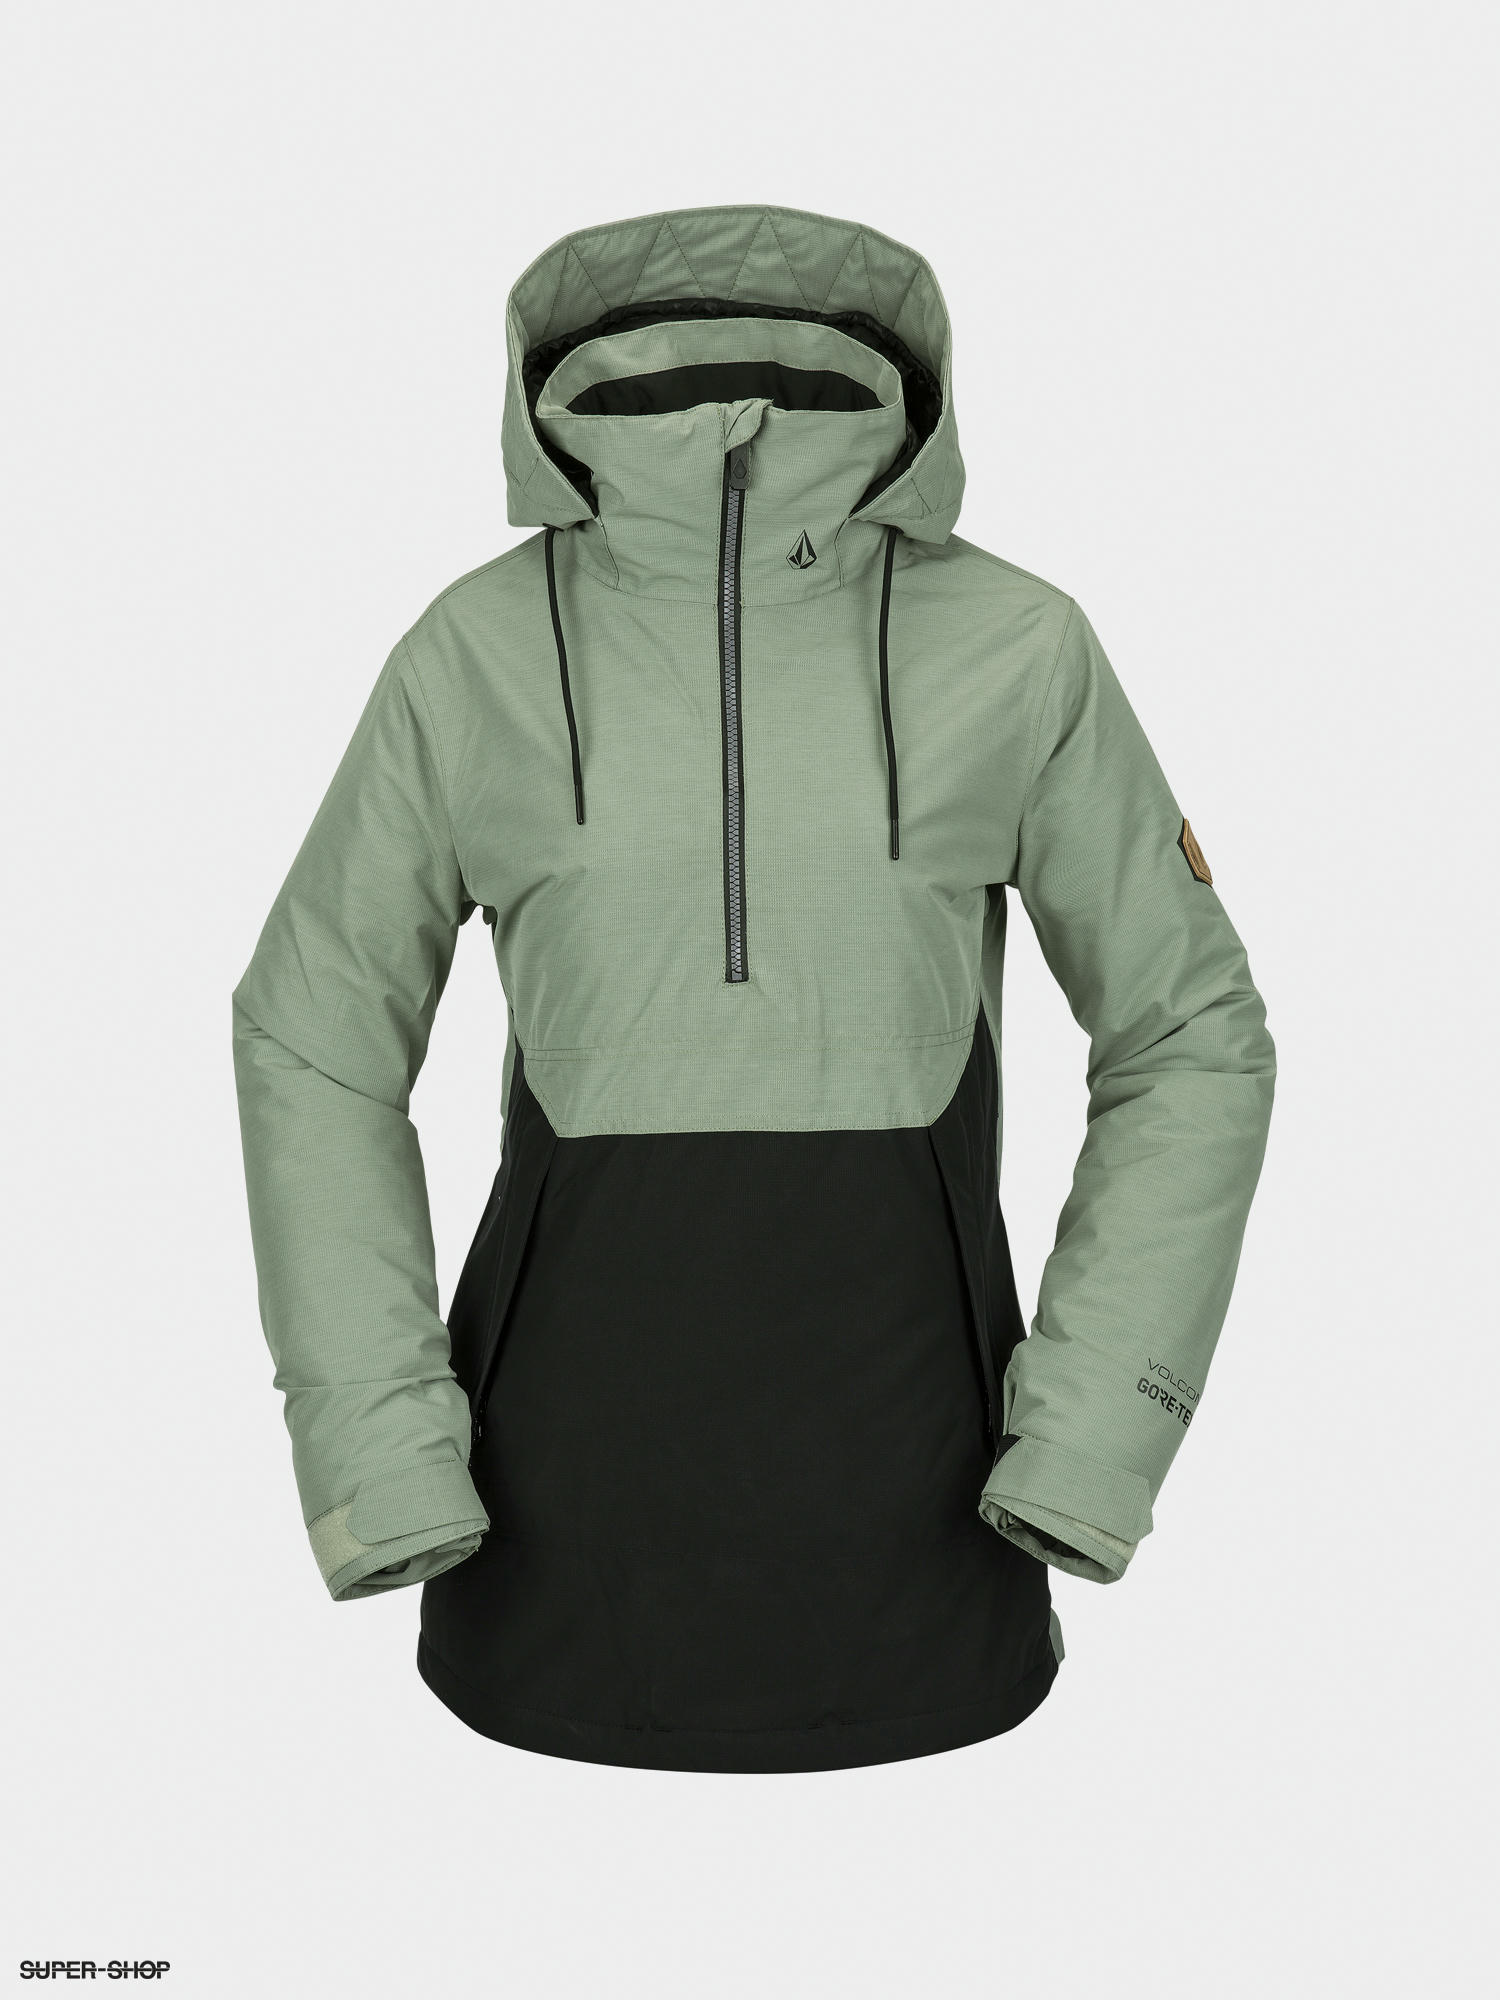 Pullover Snowboard Jacket Sale, 59% OFF | www.ingeniovirtual.com